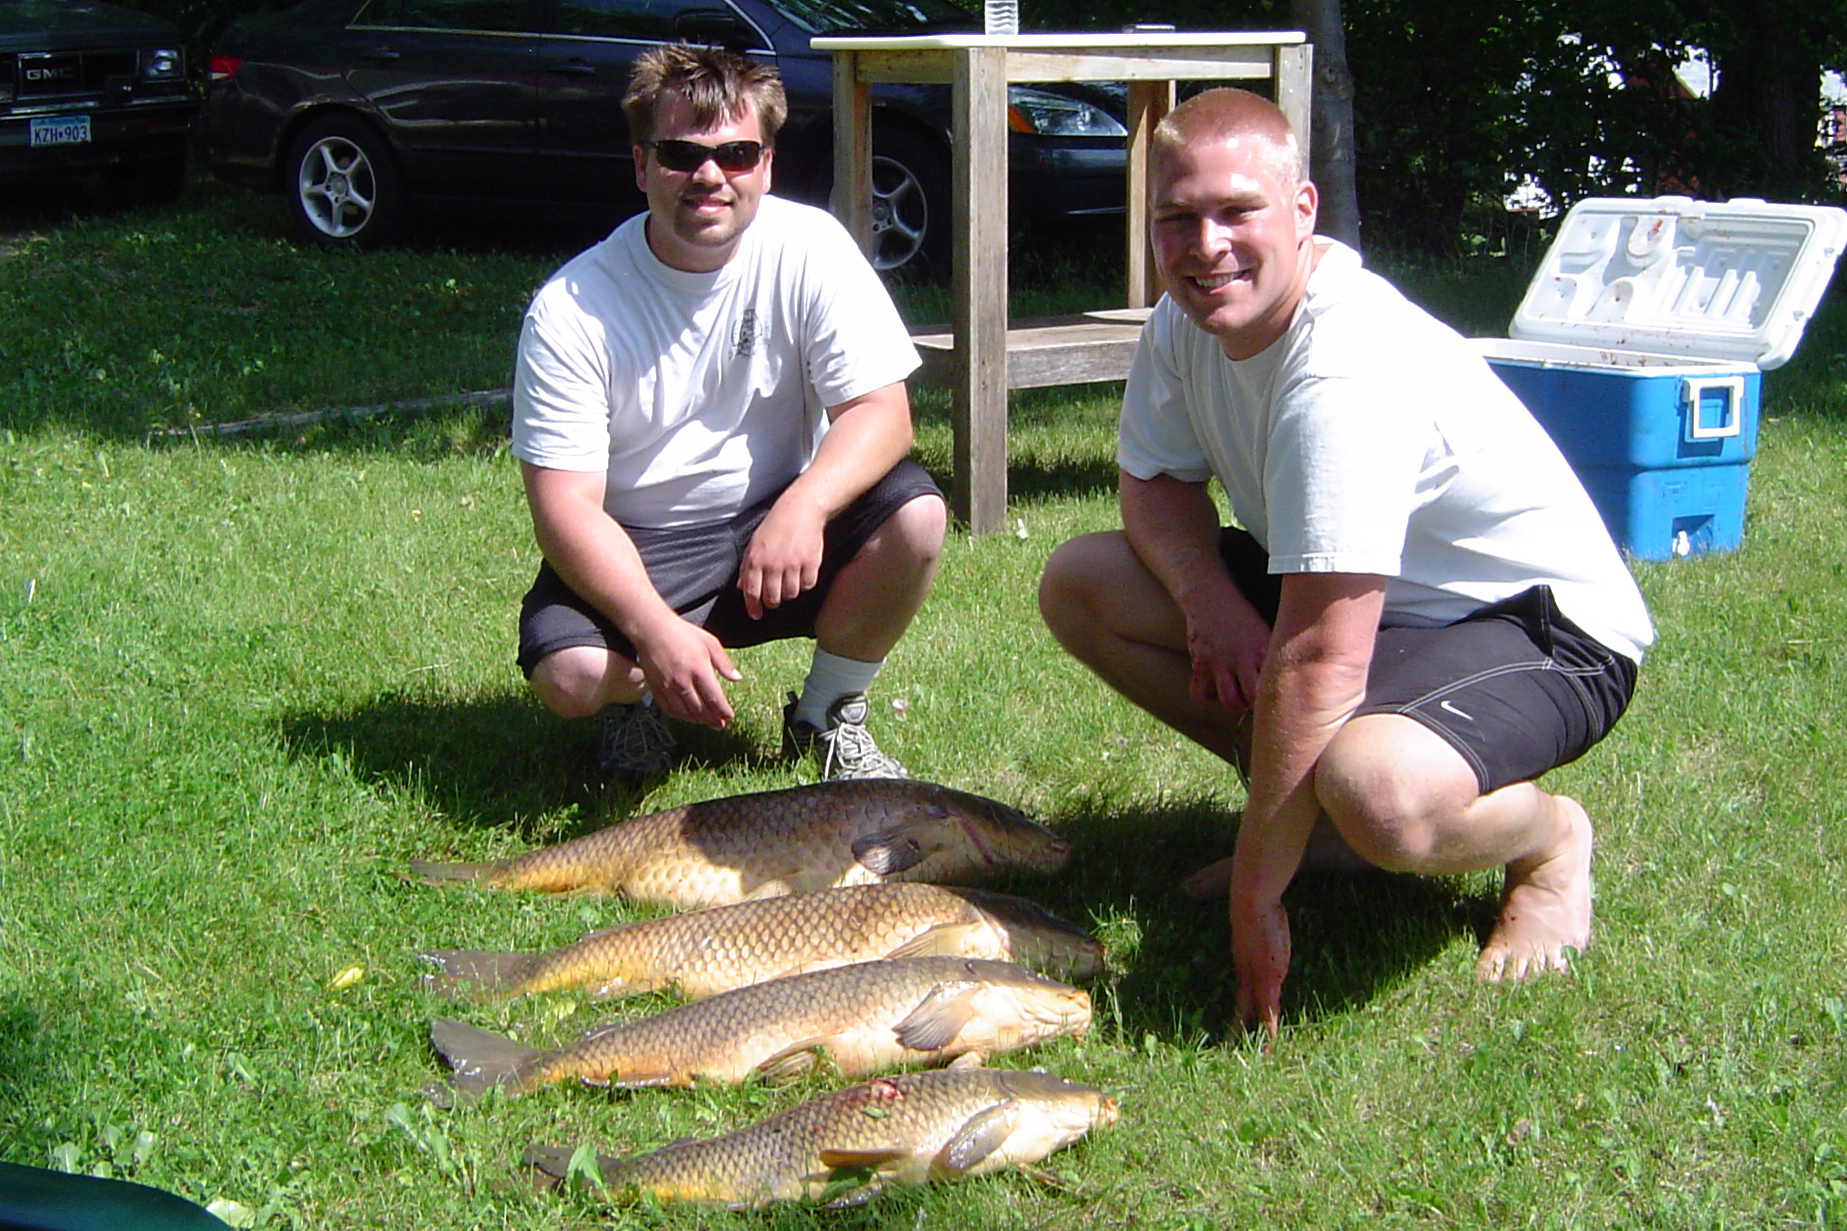 Bowfishing for carp in Minneapolis-St. Paul area lakes